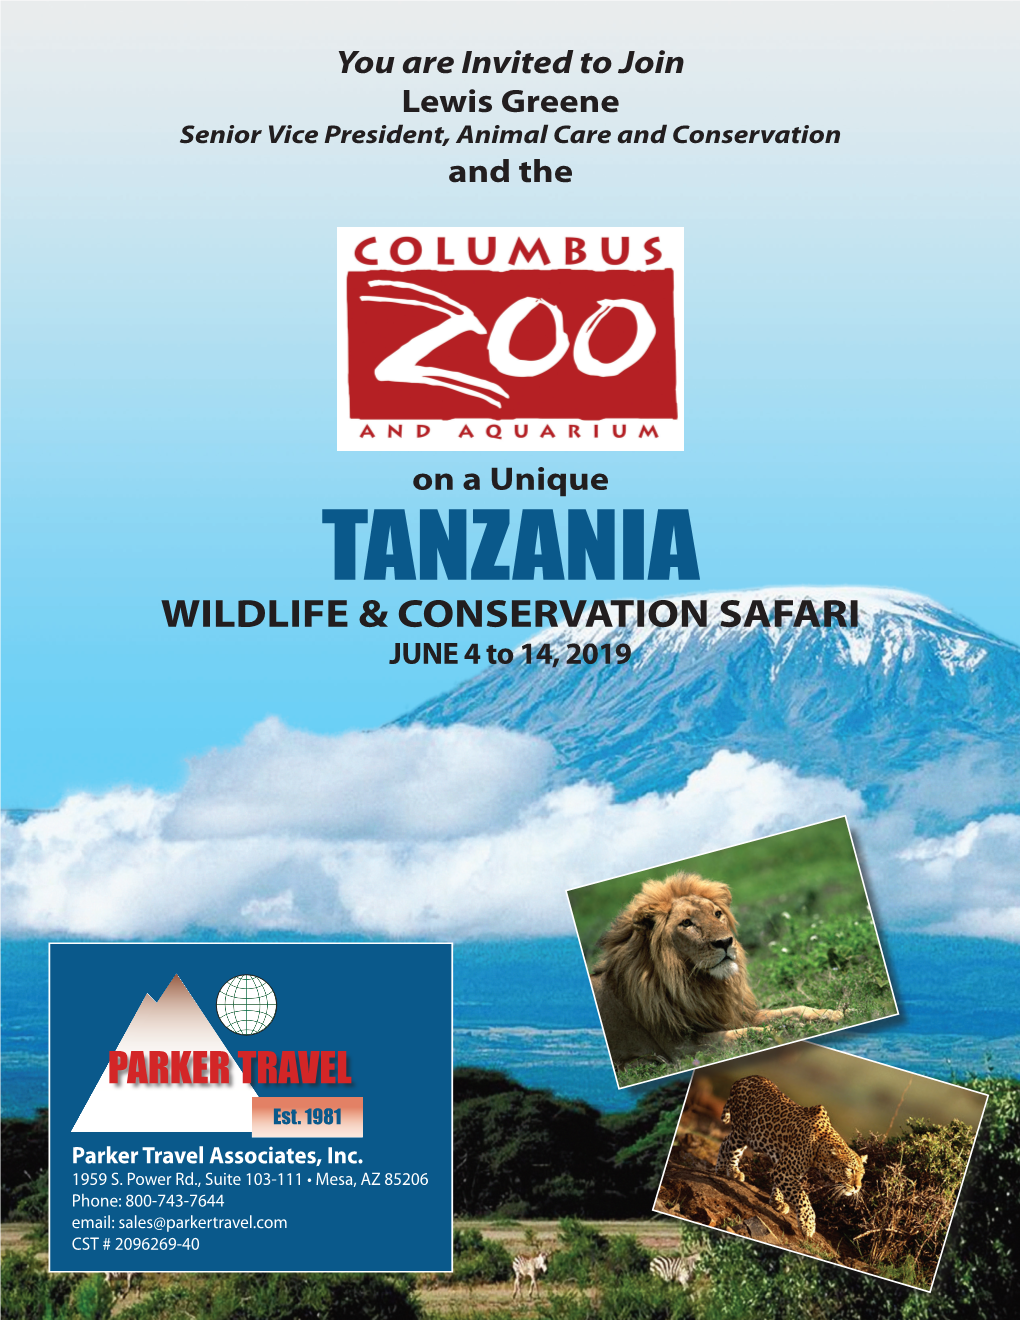 TANZANIA WILDLIFE & CONSERVATION SAFARI JUNE 4 to 14, 2019